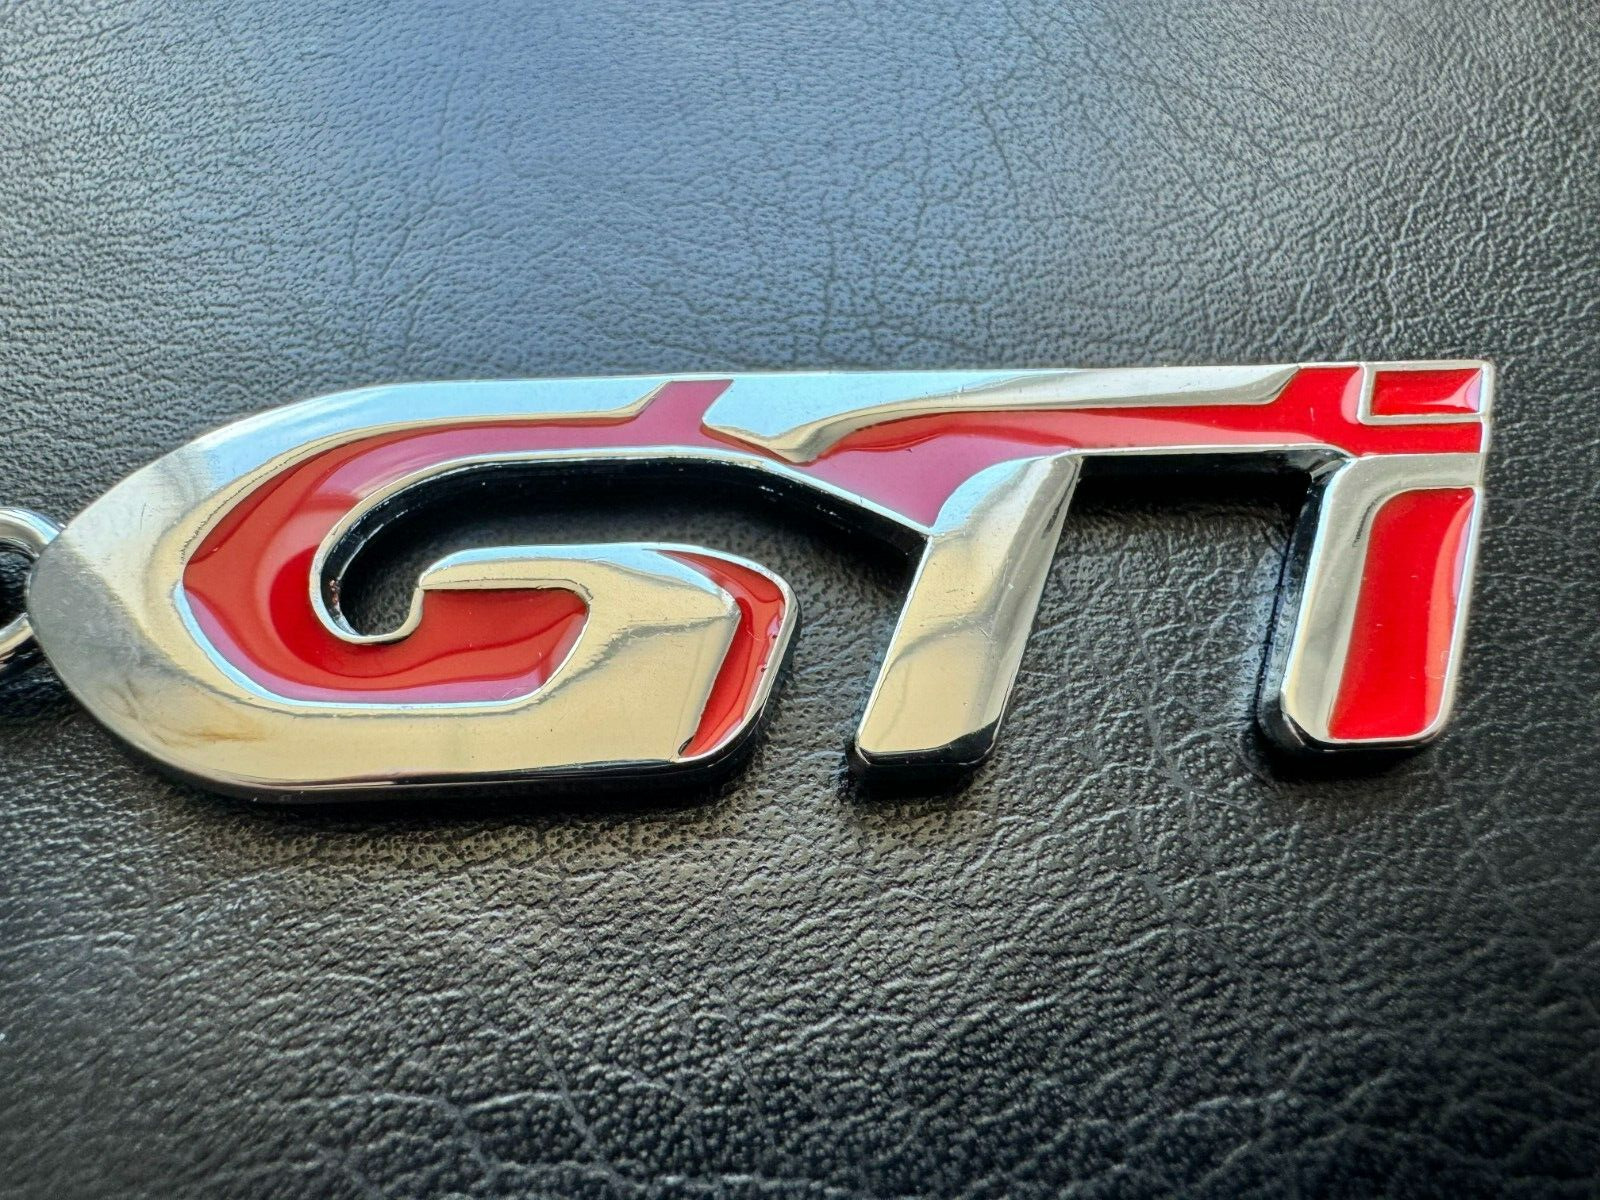 GTI Keychain: Silver VW GTI Keychain with Red Trim, Volkswagen GTI